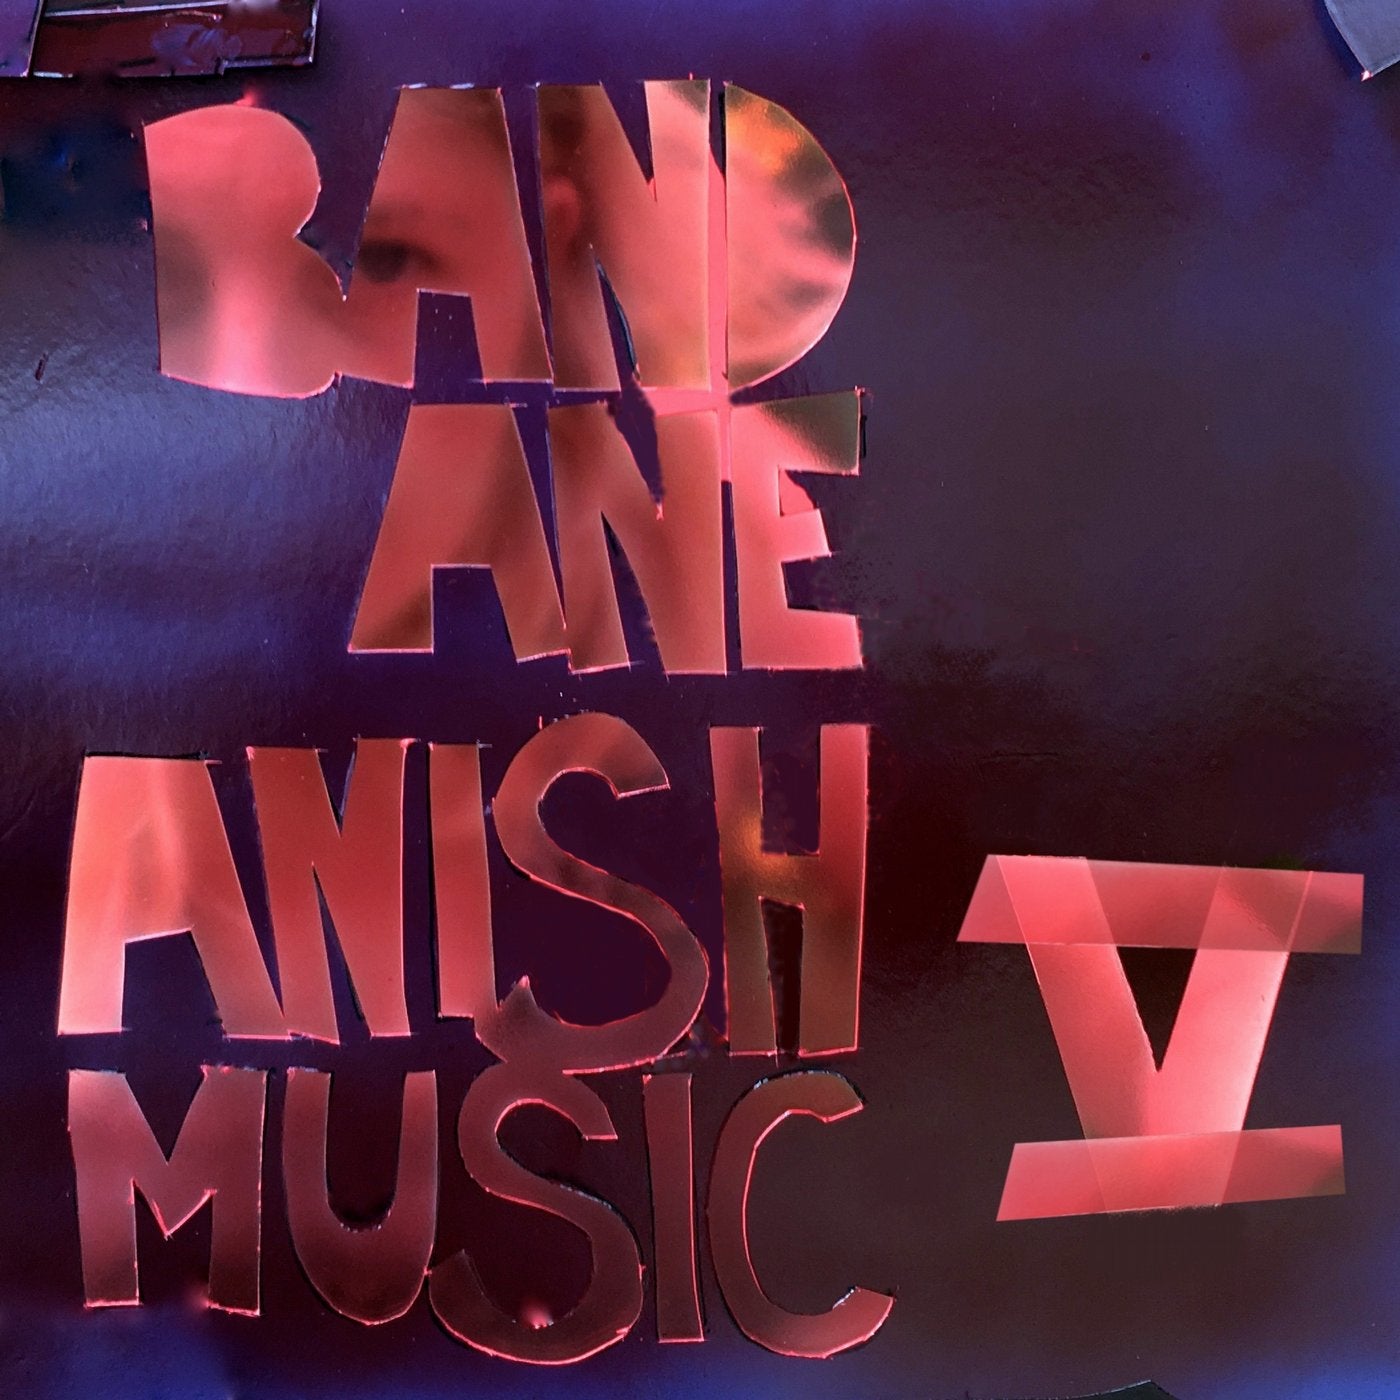 Anish Music V